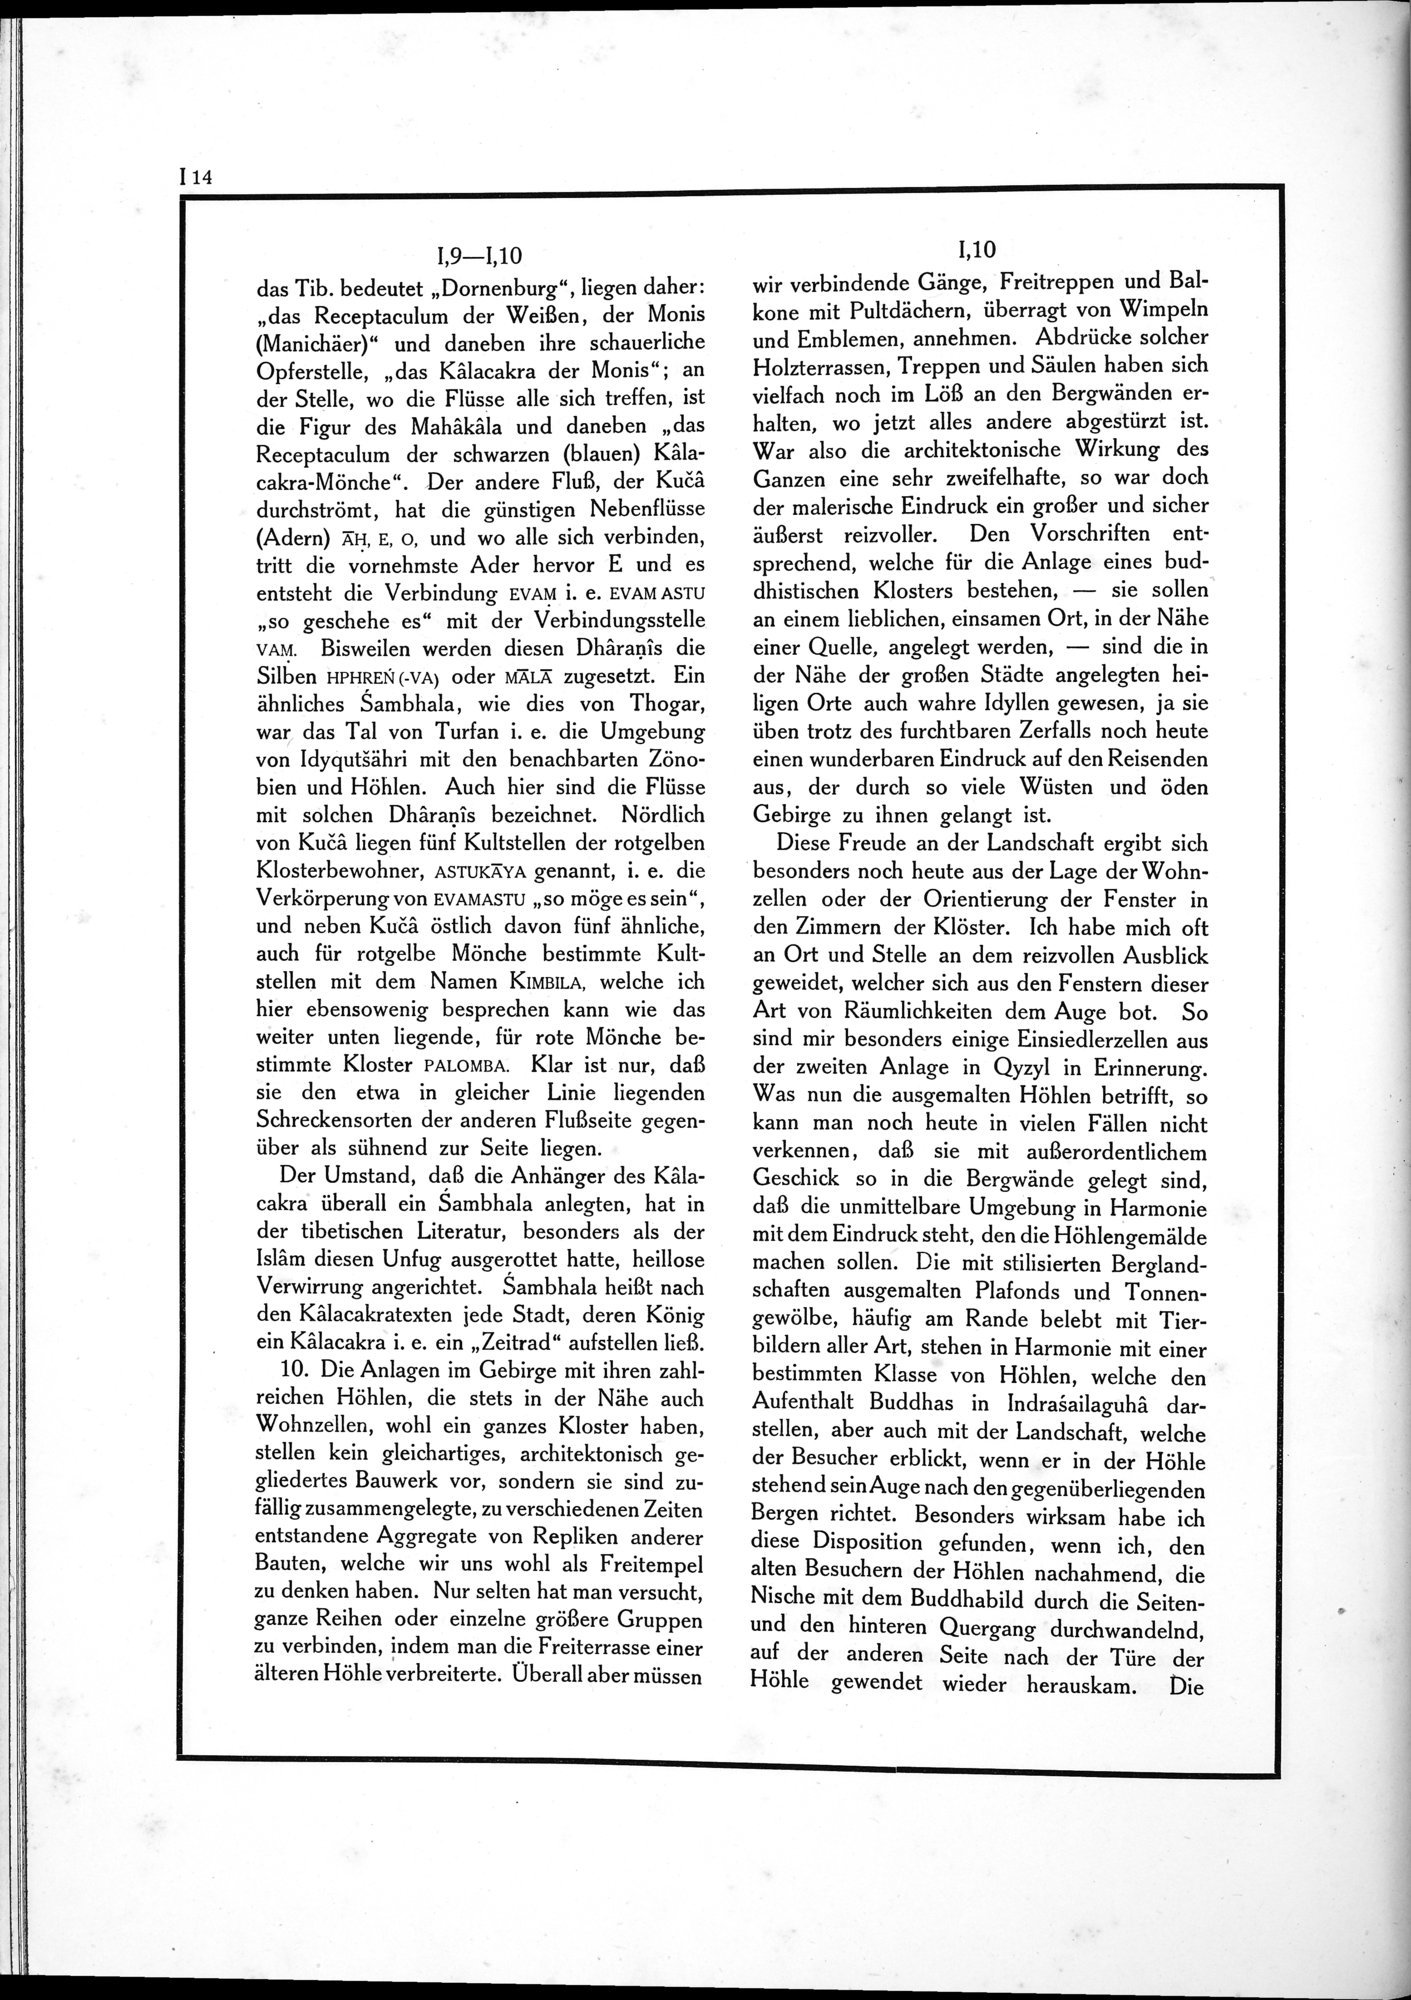 Alt-Kutscha : vol.1 / Page 26 (Grayscale High Resolution Image)